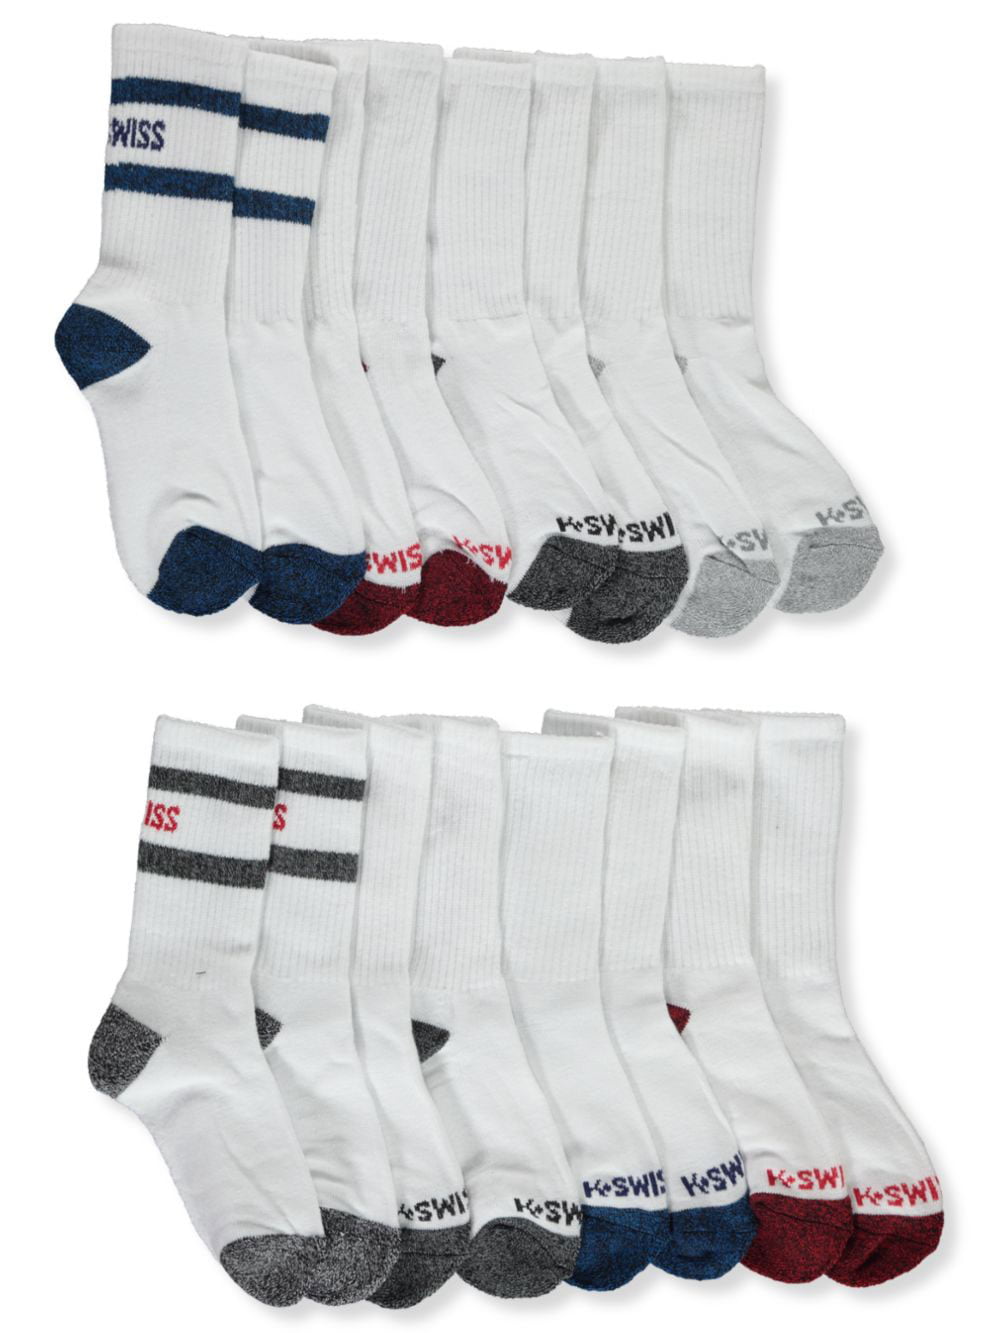 K-Swiss Boys' 8-Pack Crew Socks - white/multi, 9 - 11 / 7 - 14 years ...